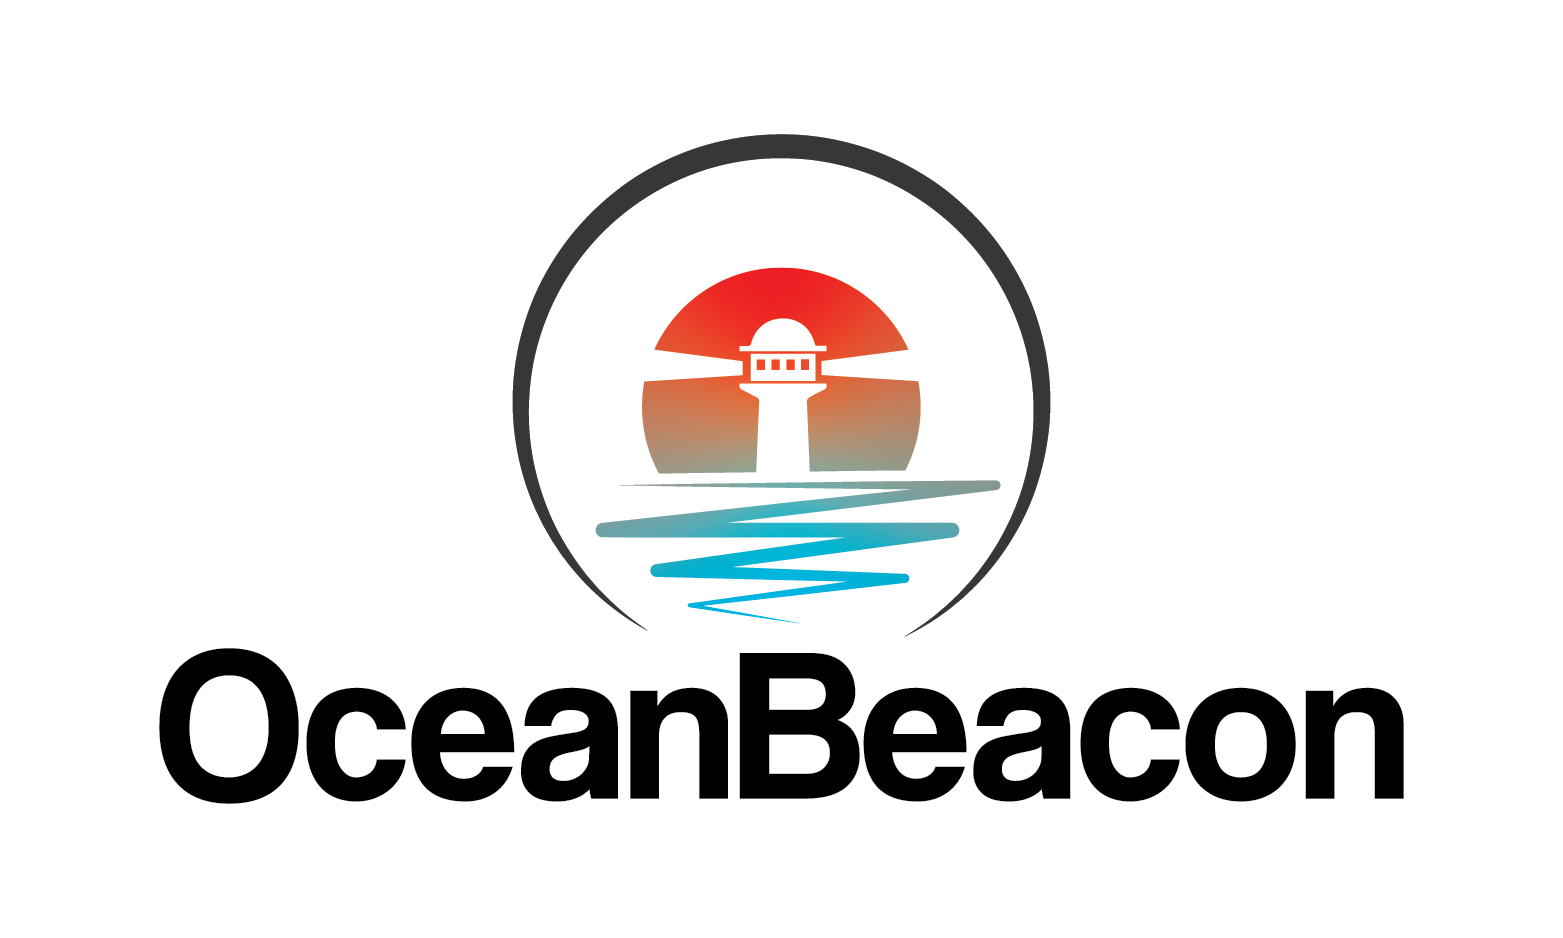 OceanBeacon.com - Creative brandable domain for sale